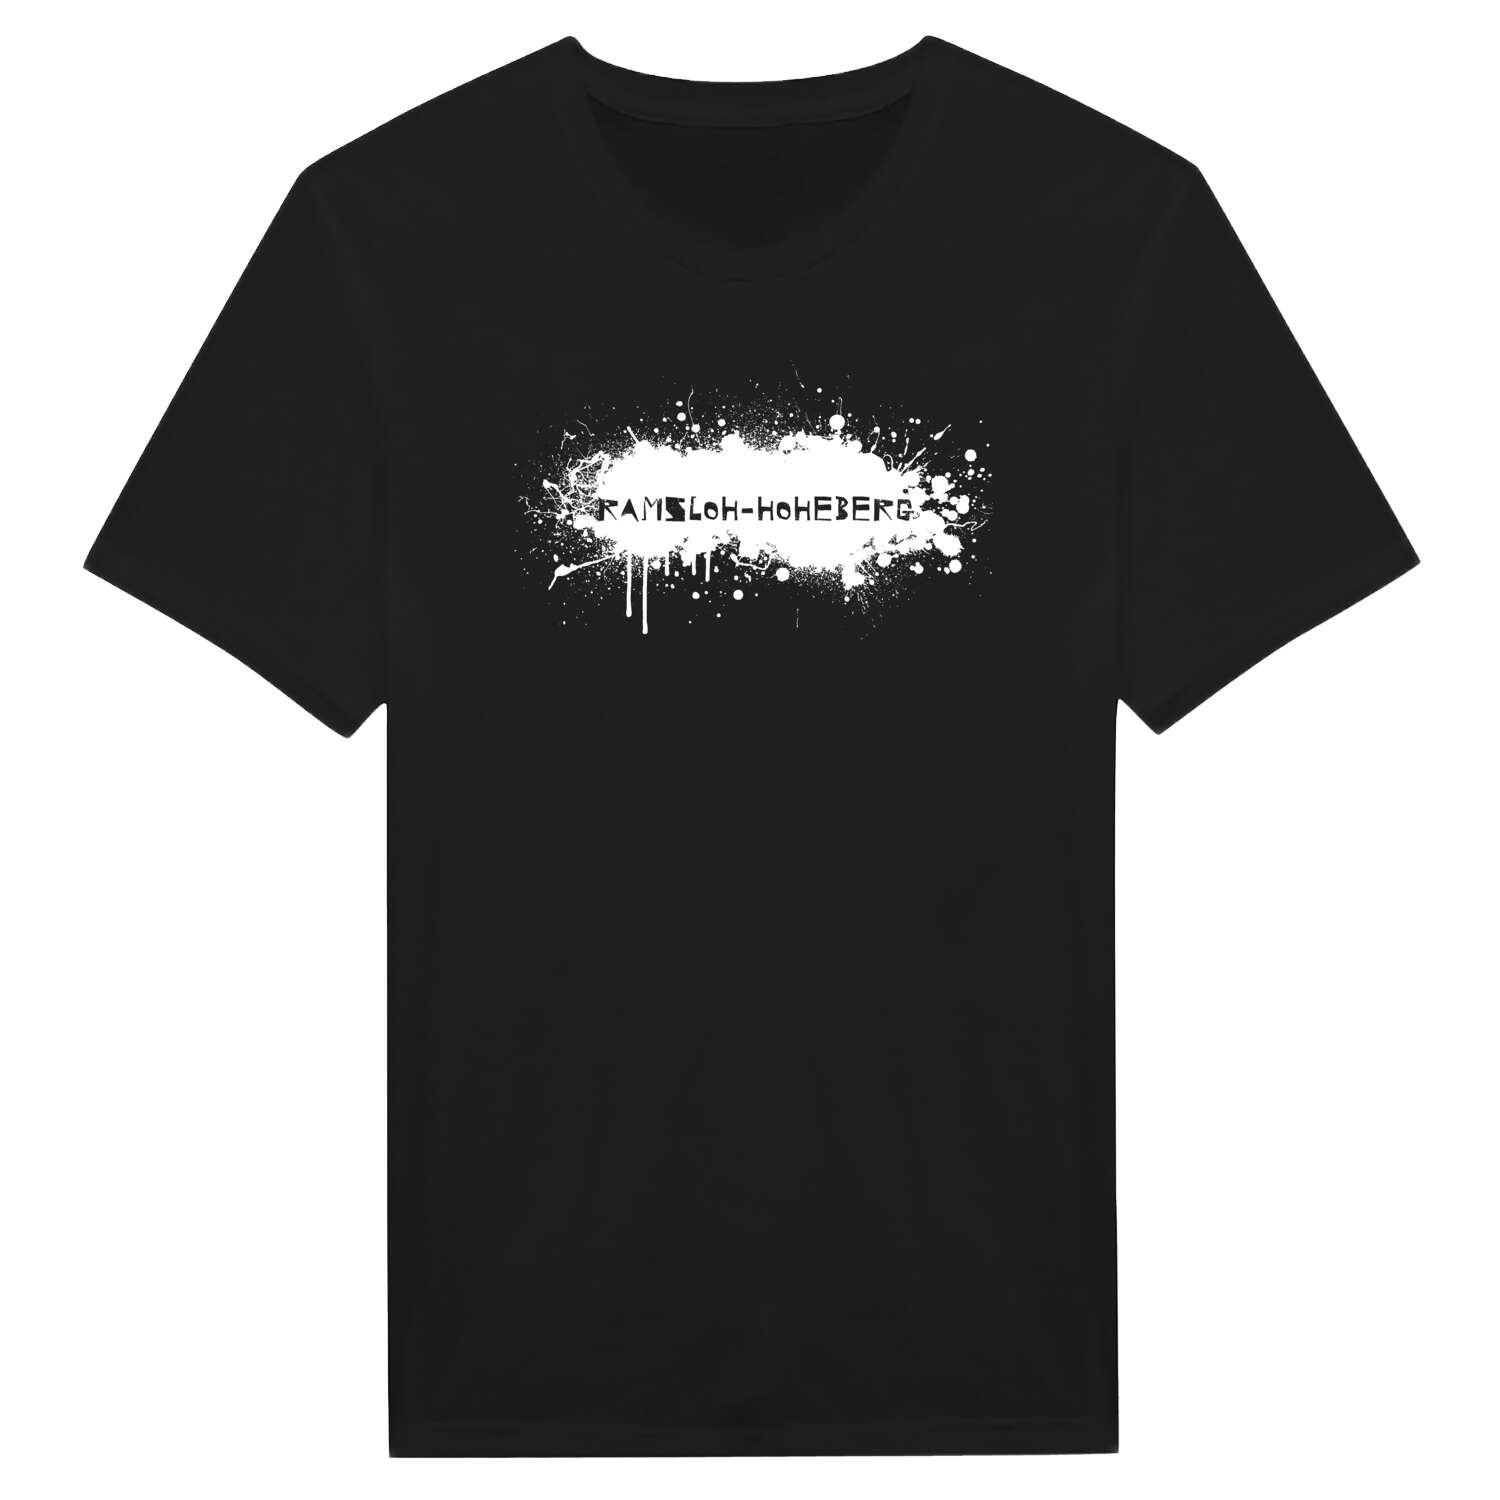 Ramsloh-Hoheberg T-Shirt »Paint Splash Punk«